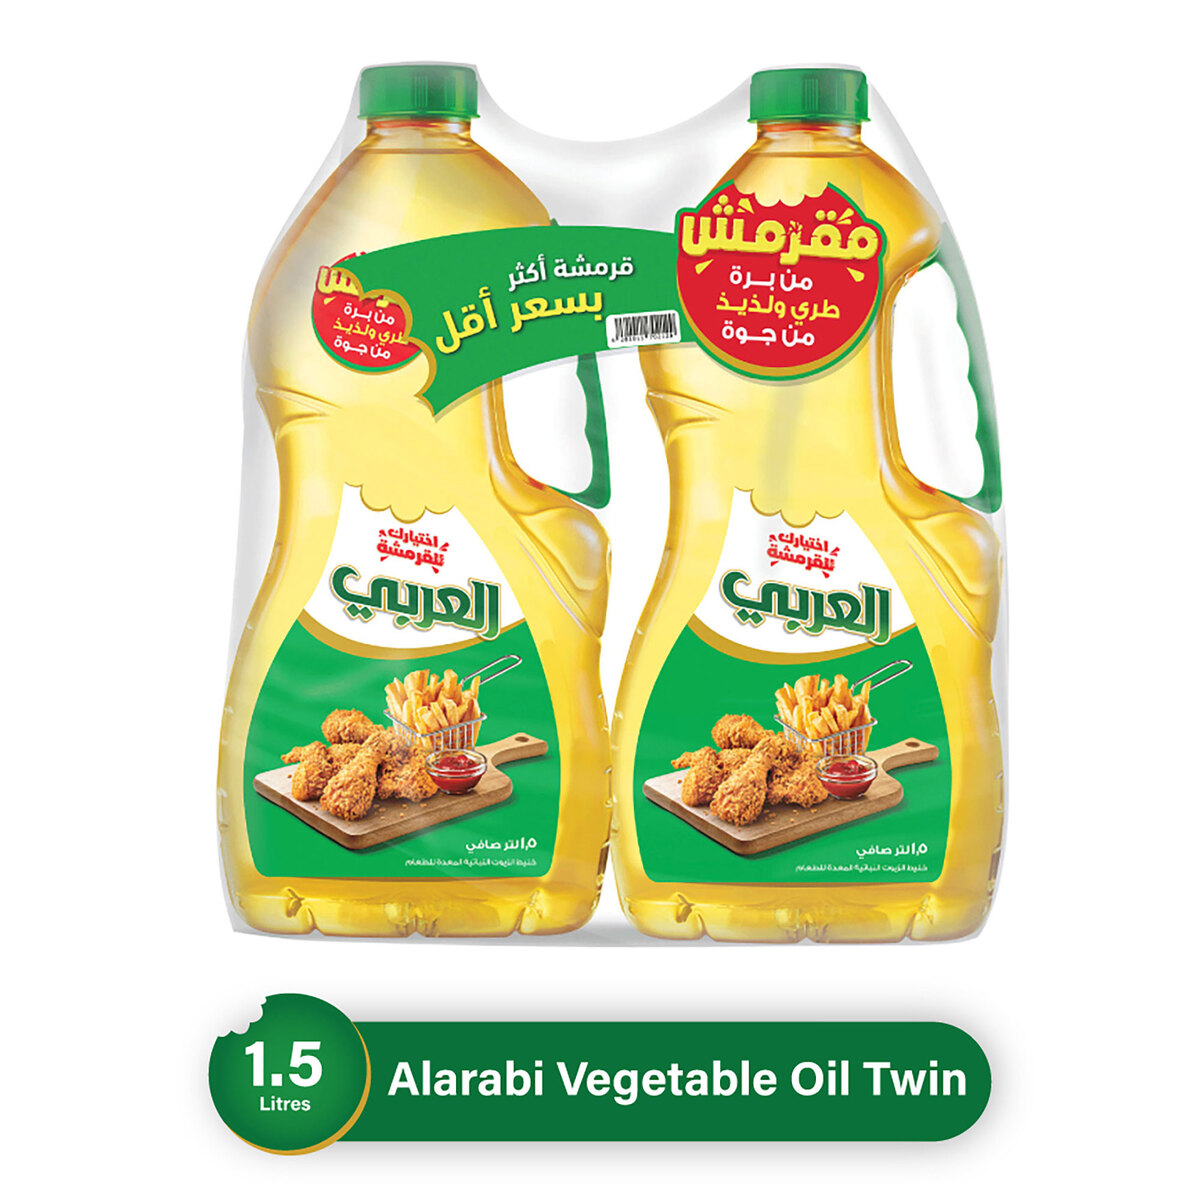 Al Arabi Pure Vegetable Oil Value Pack 2 x 1.5 Litres